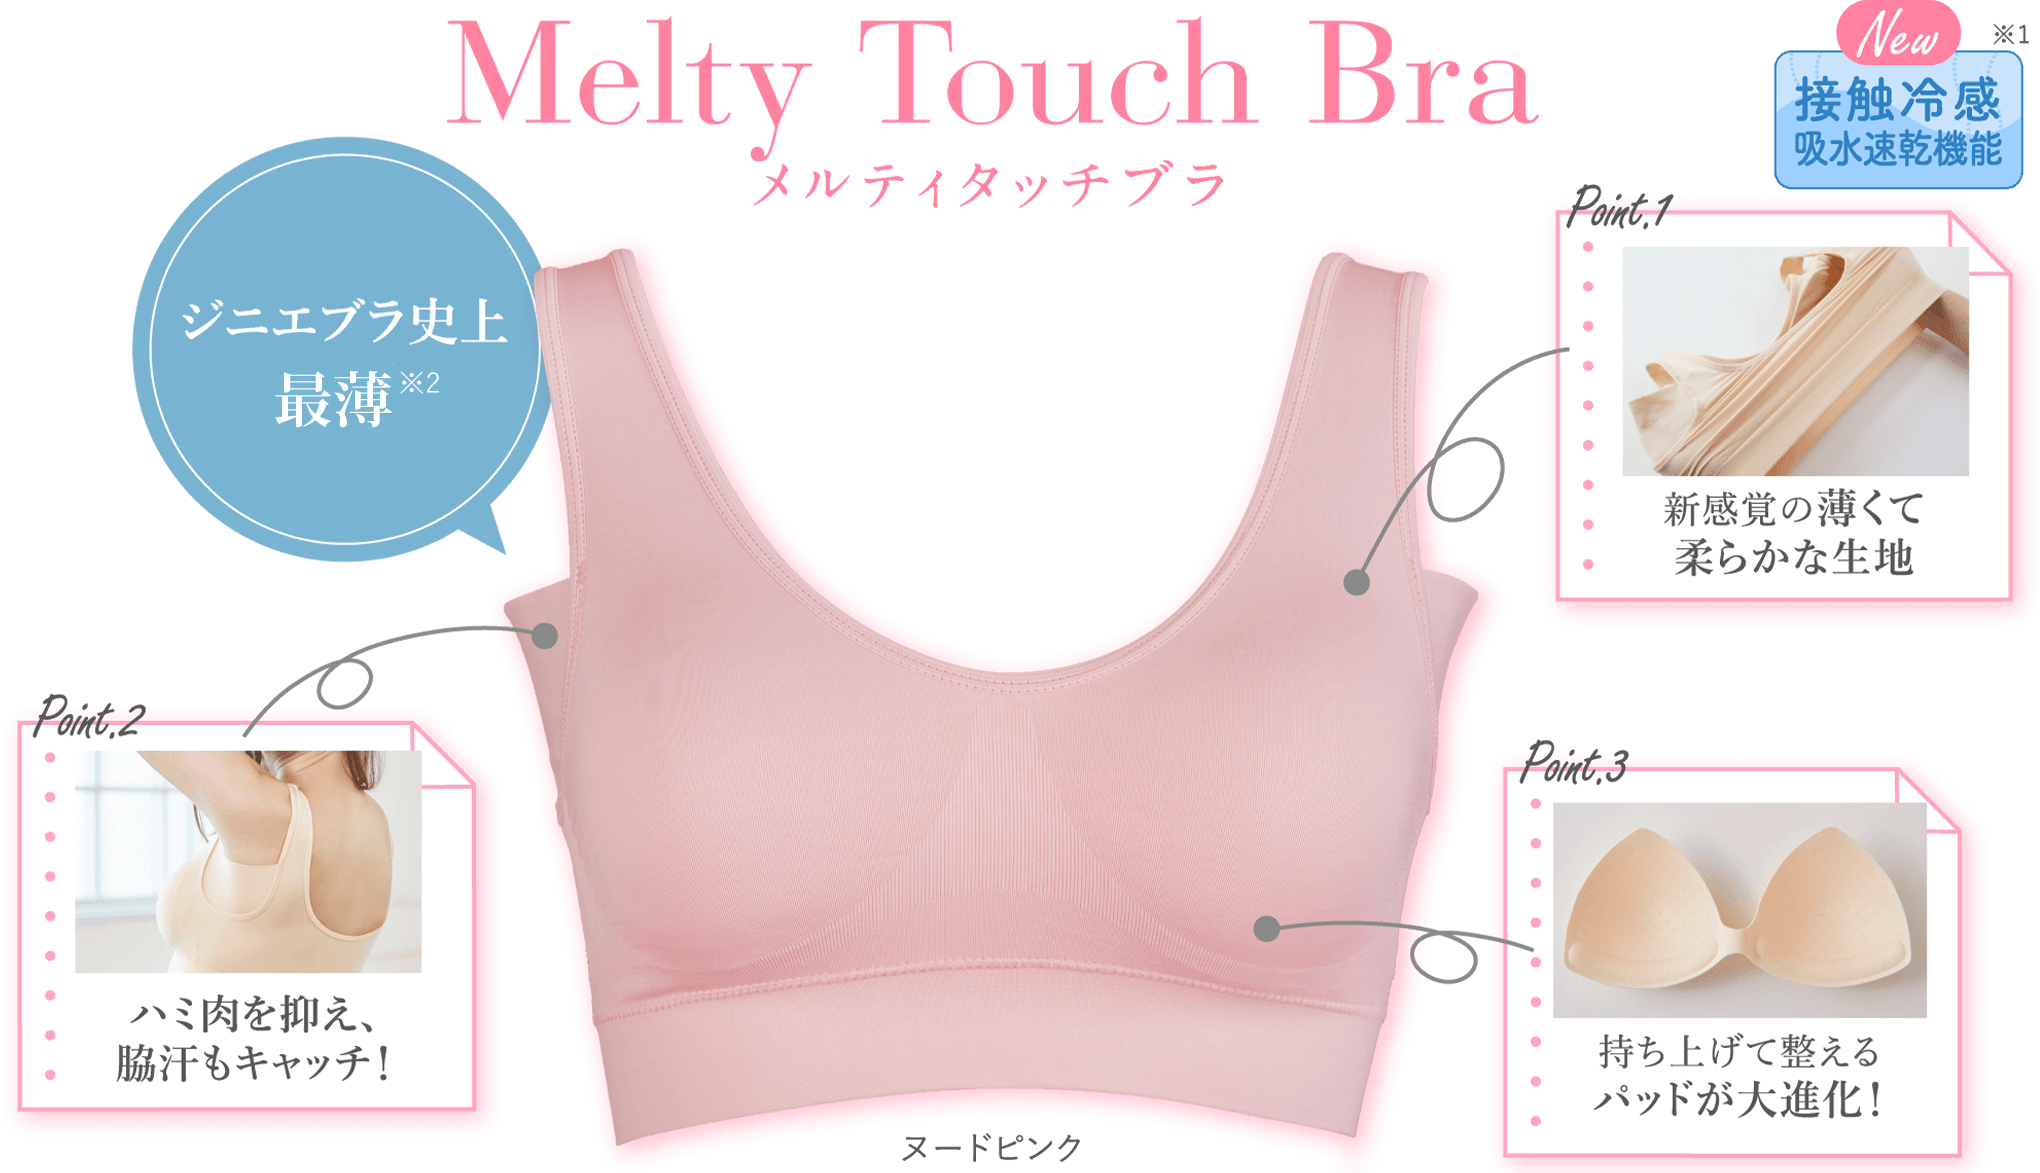 Melty Touch Bra - メルティタッチブラ - 接触冷感吸水速乾機能※1　ジニエブラ史上最薄※2